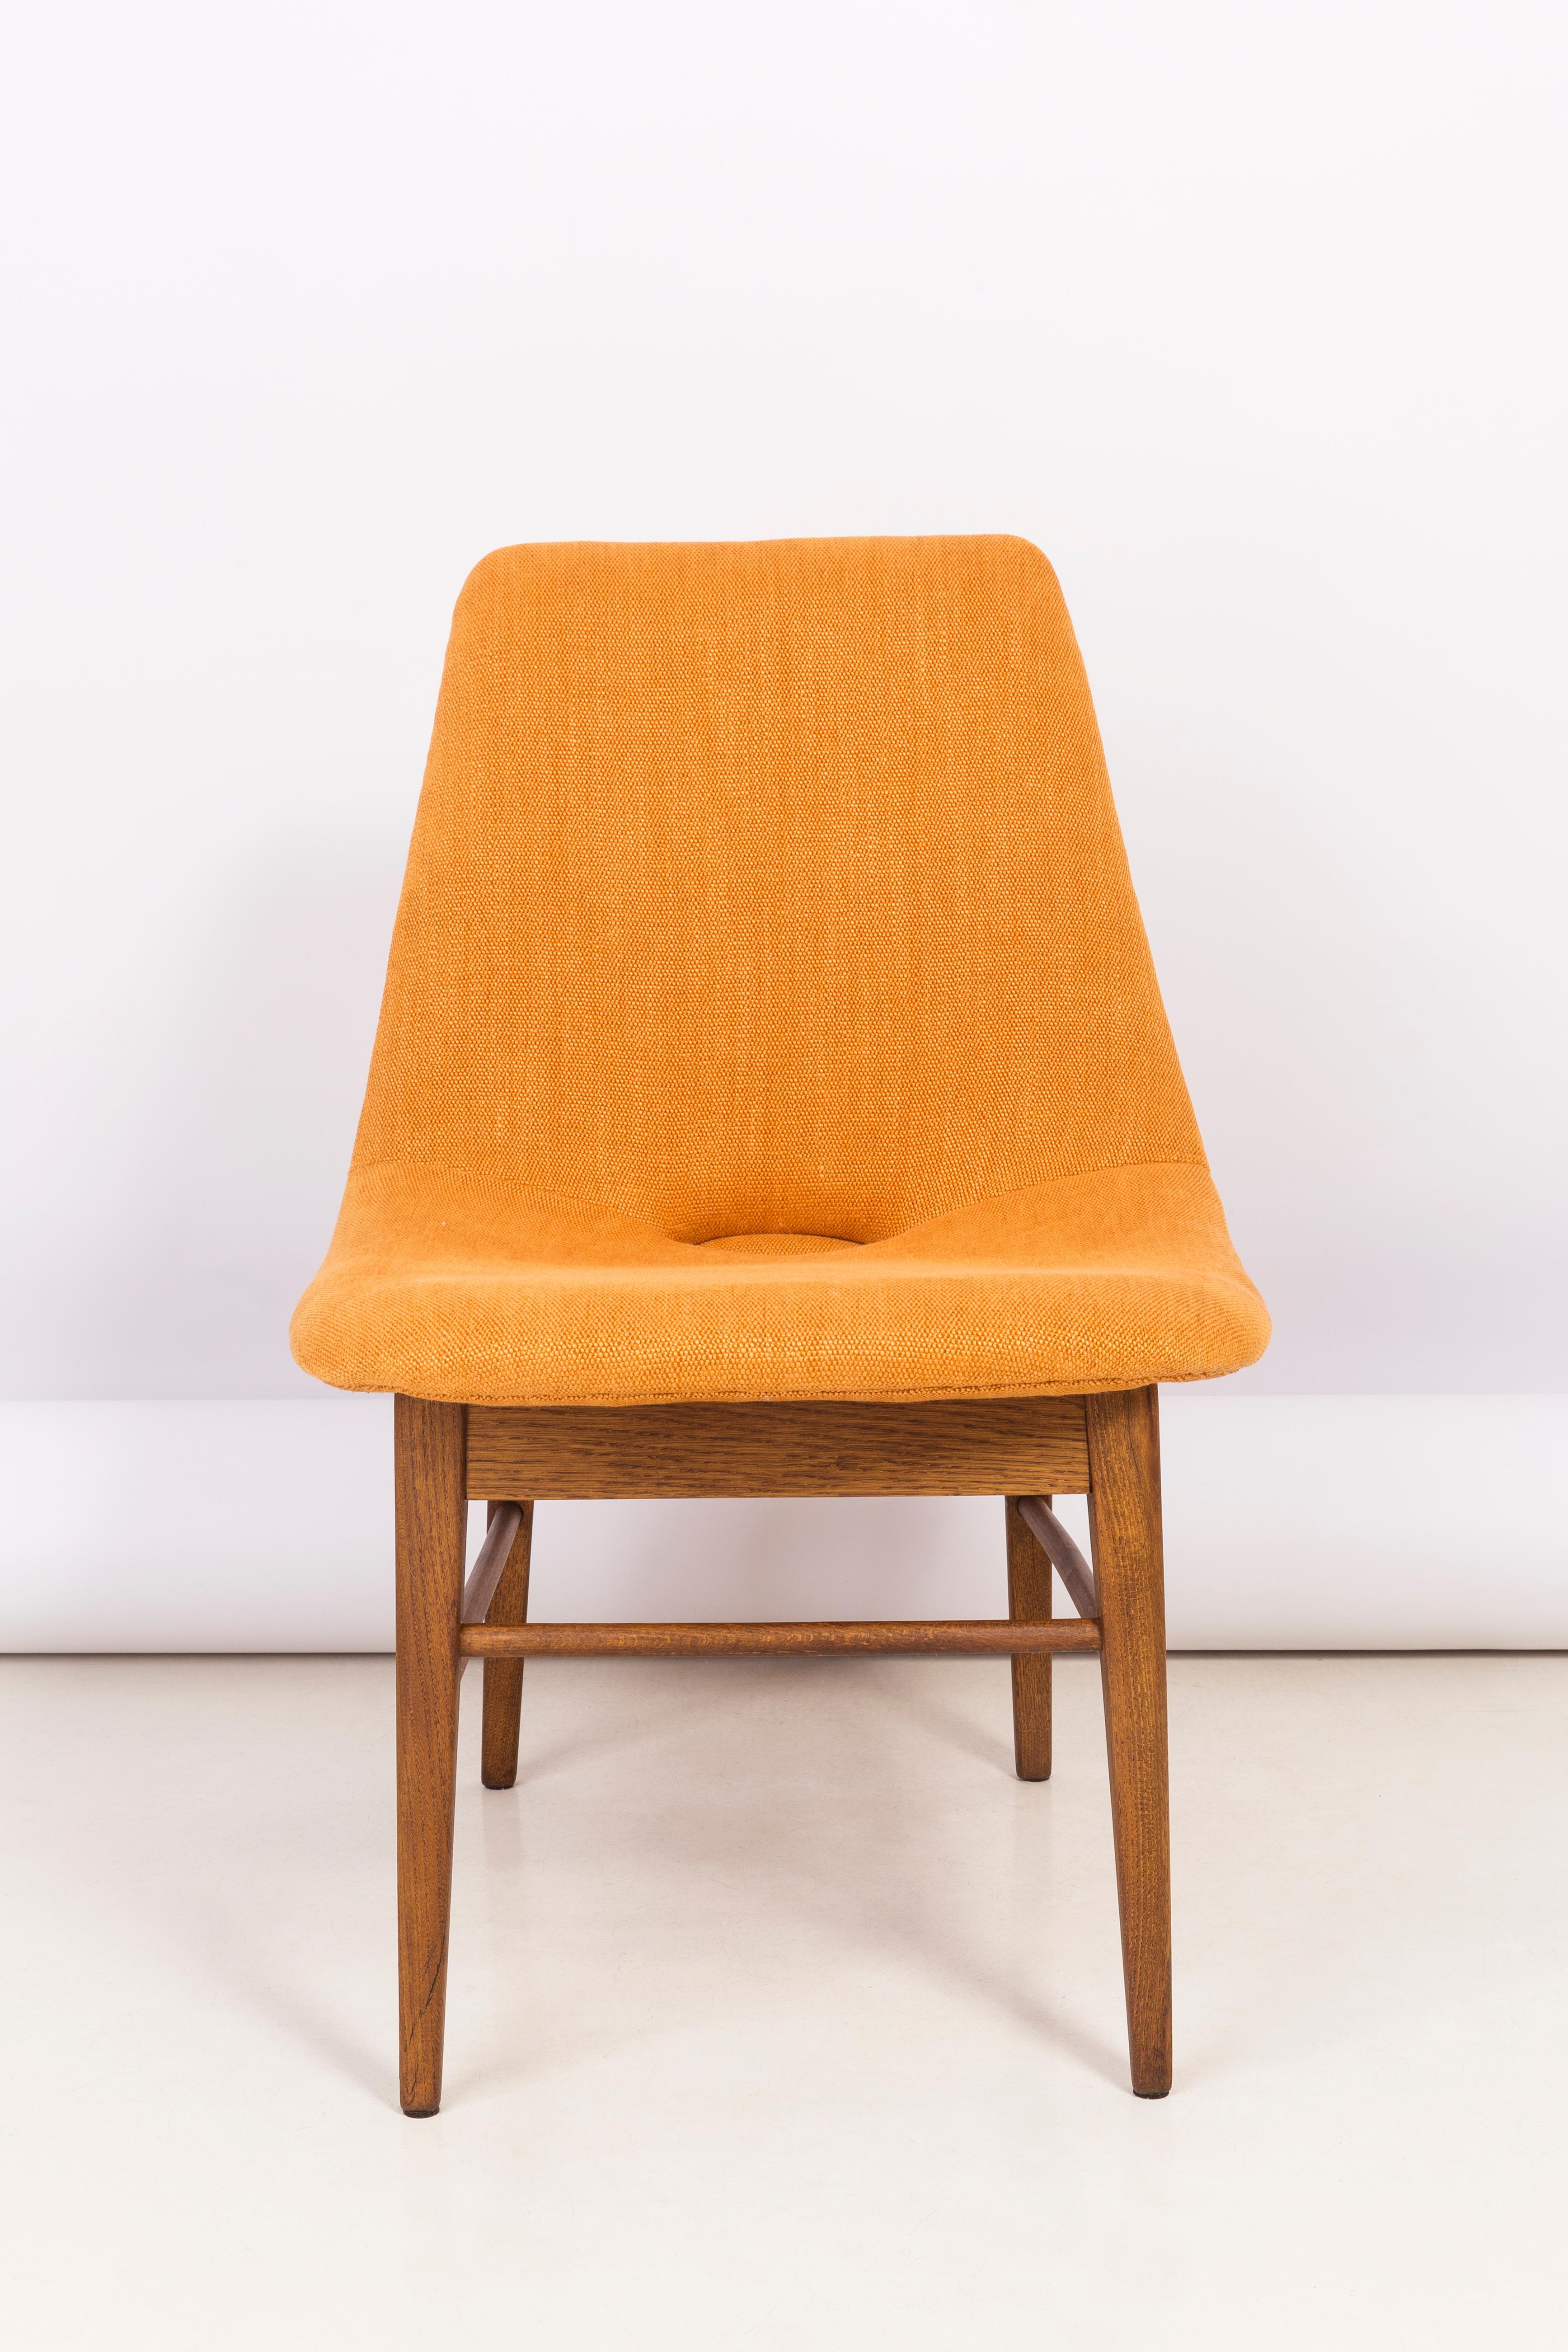 Rare 20th Century Orange Shell Chair, H.Lachert, 1960s For Sale 6